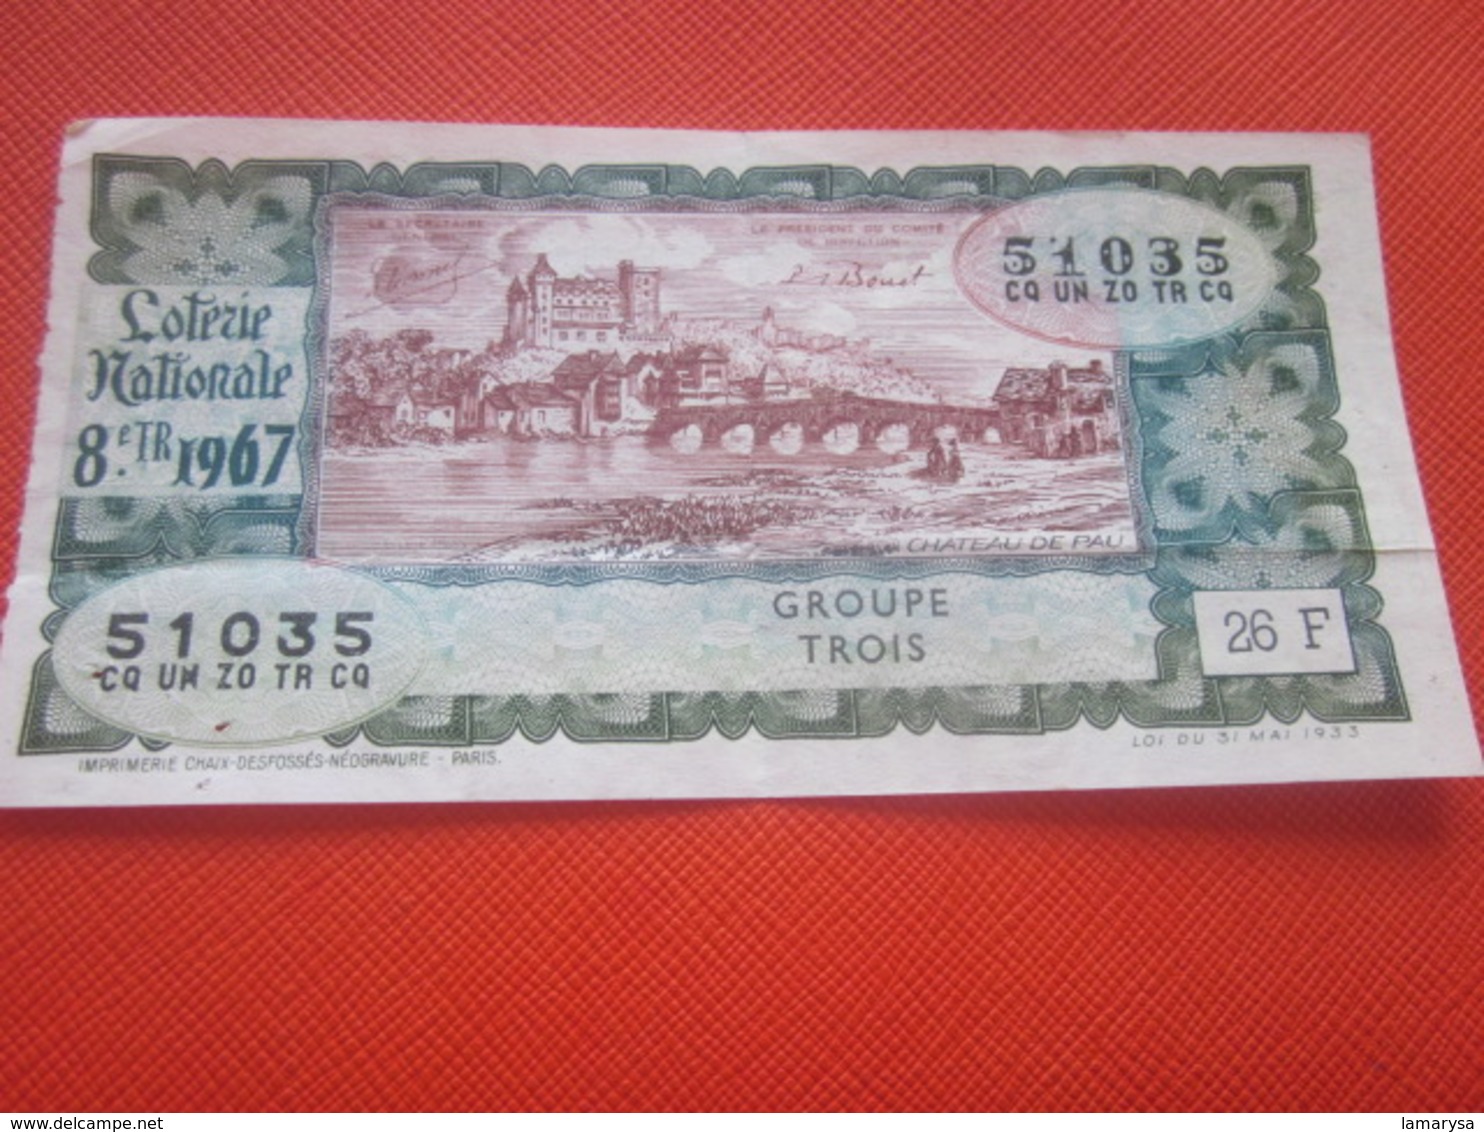 CHÂTEAU DE PAU --- Année 1967-Billet De La Loterie Nationale - Biglietti Della Lotteria